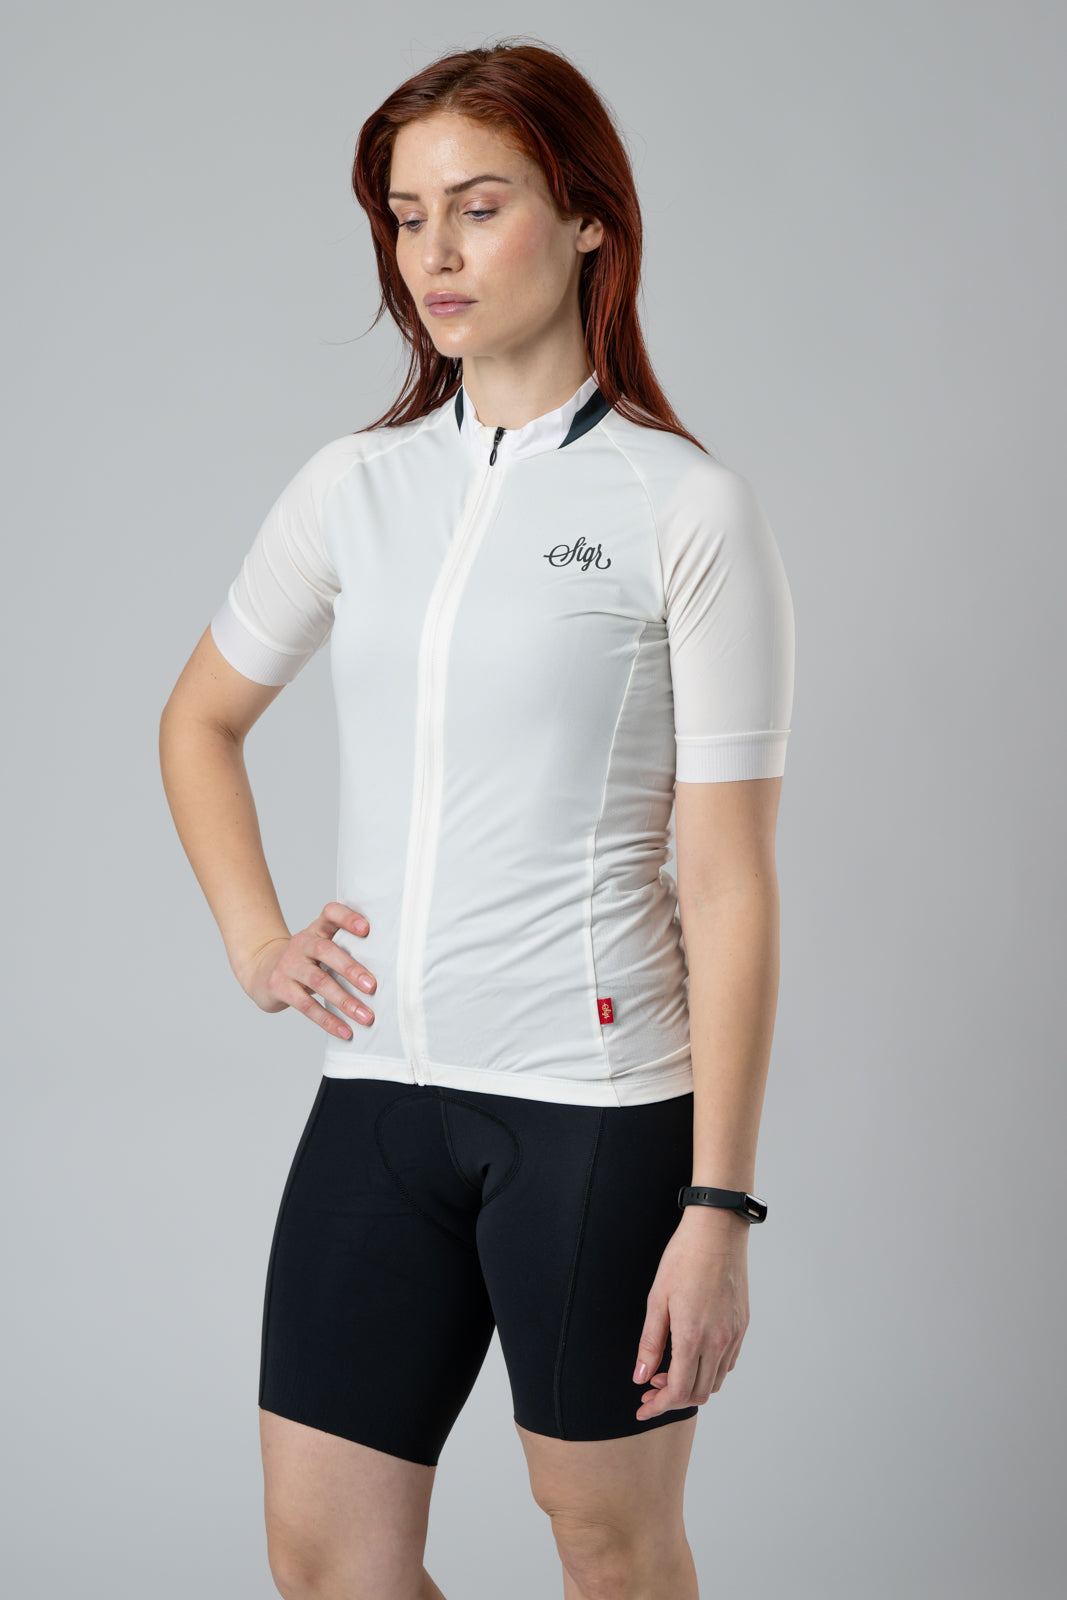 White Cycling Jersey for Women -'Hägg' by Sigr Swedish Bikewear